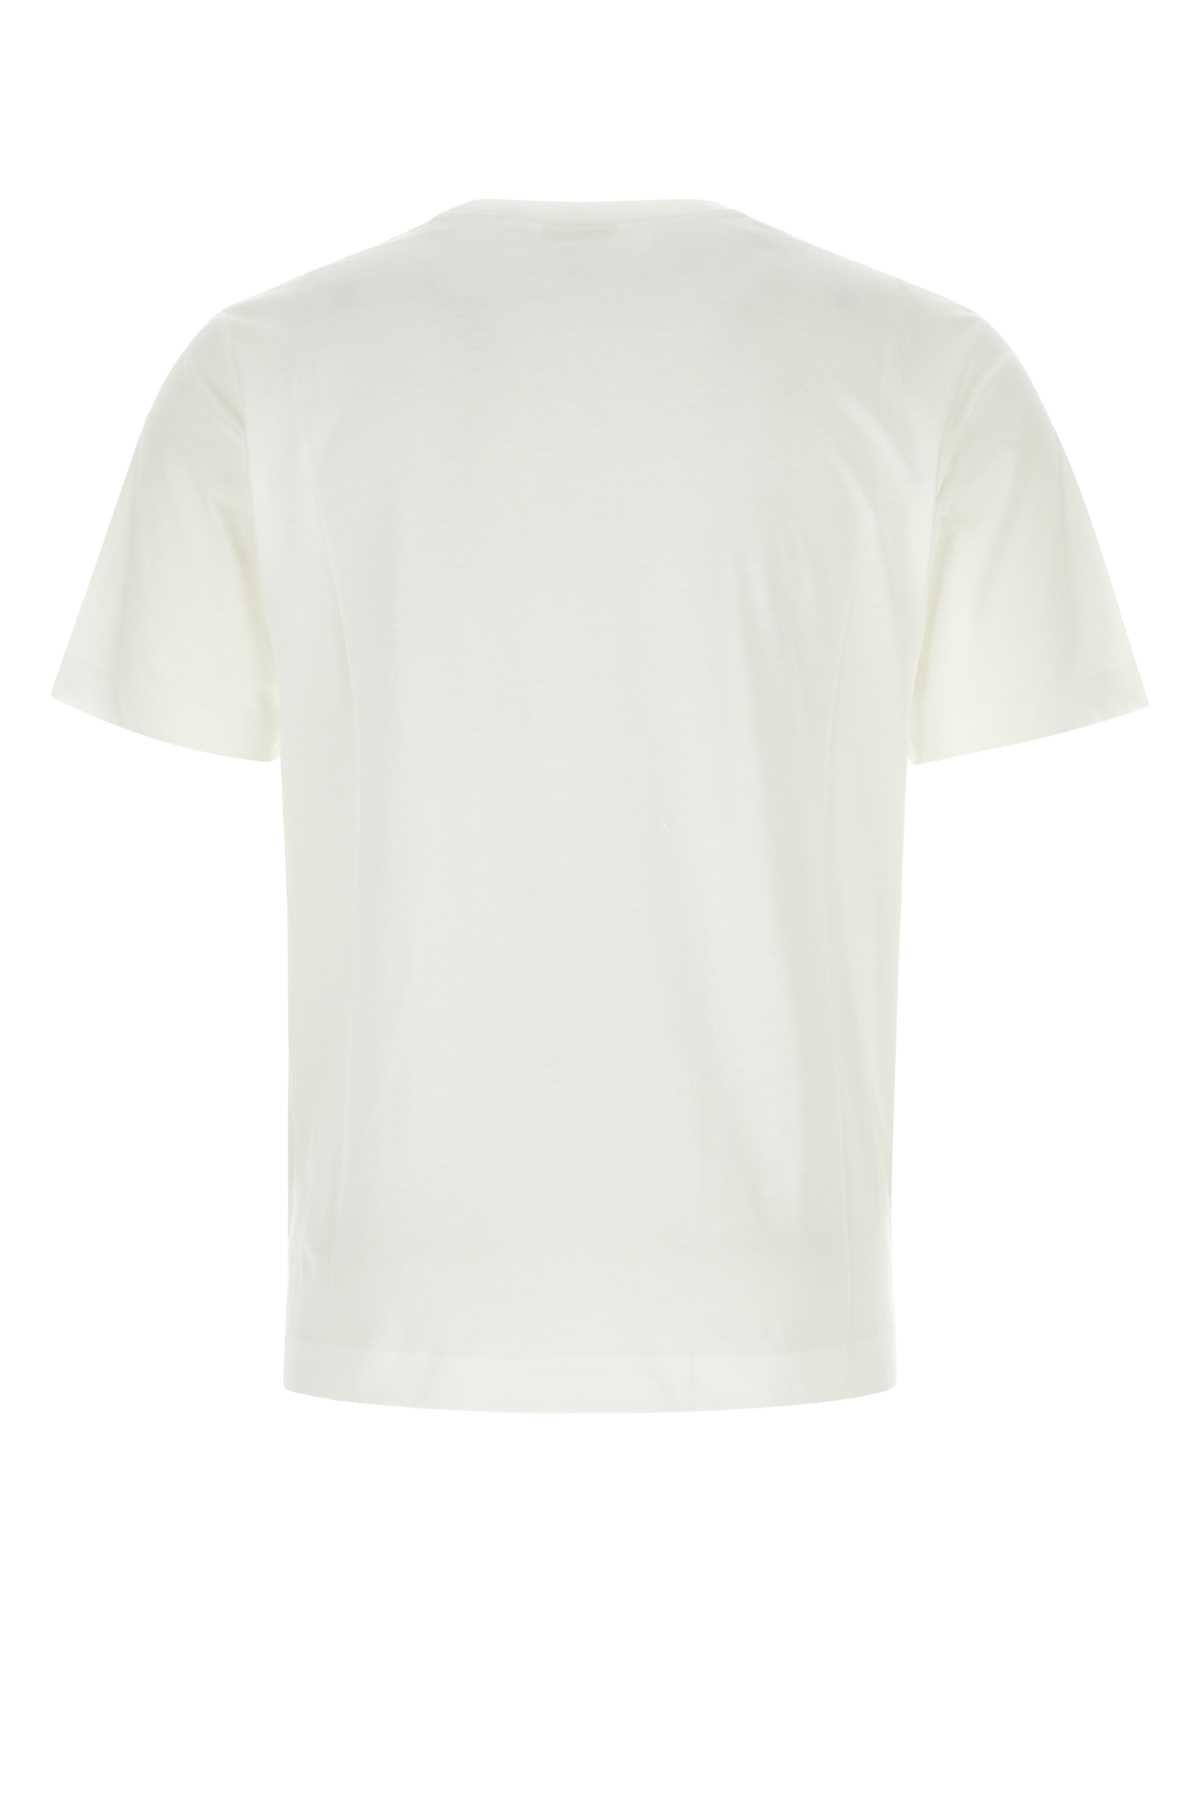 Shop Dries Van Noten White Cotton T-shirt